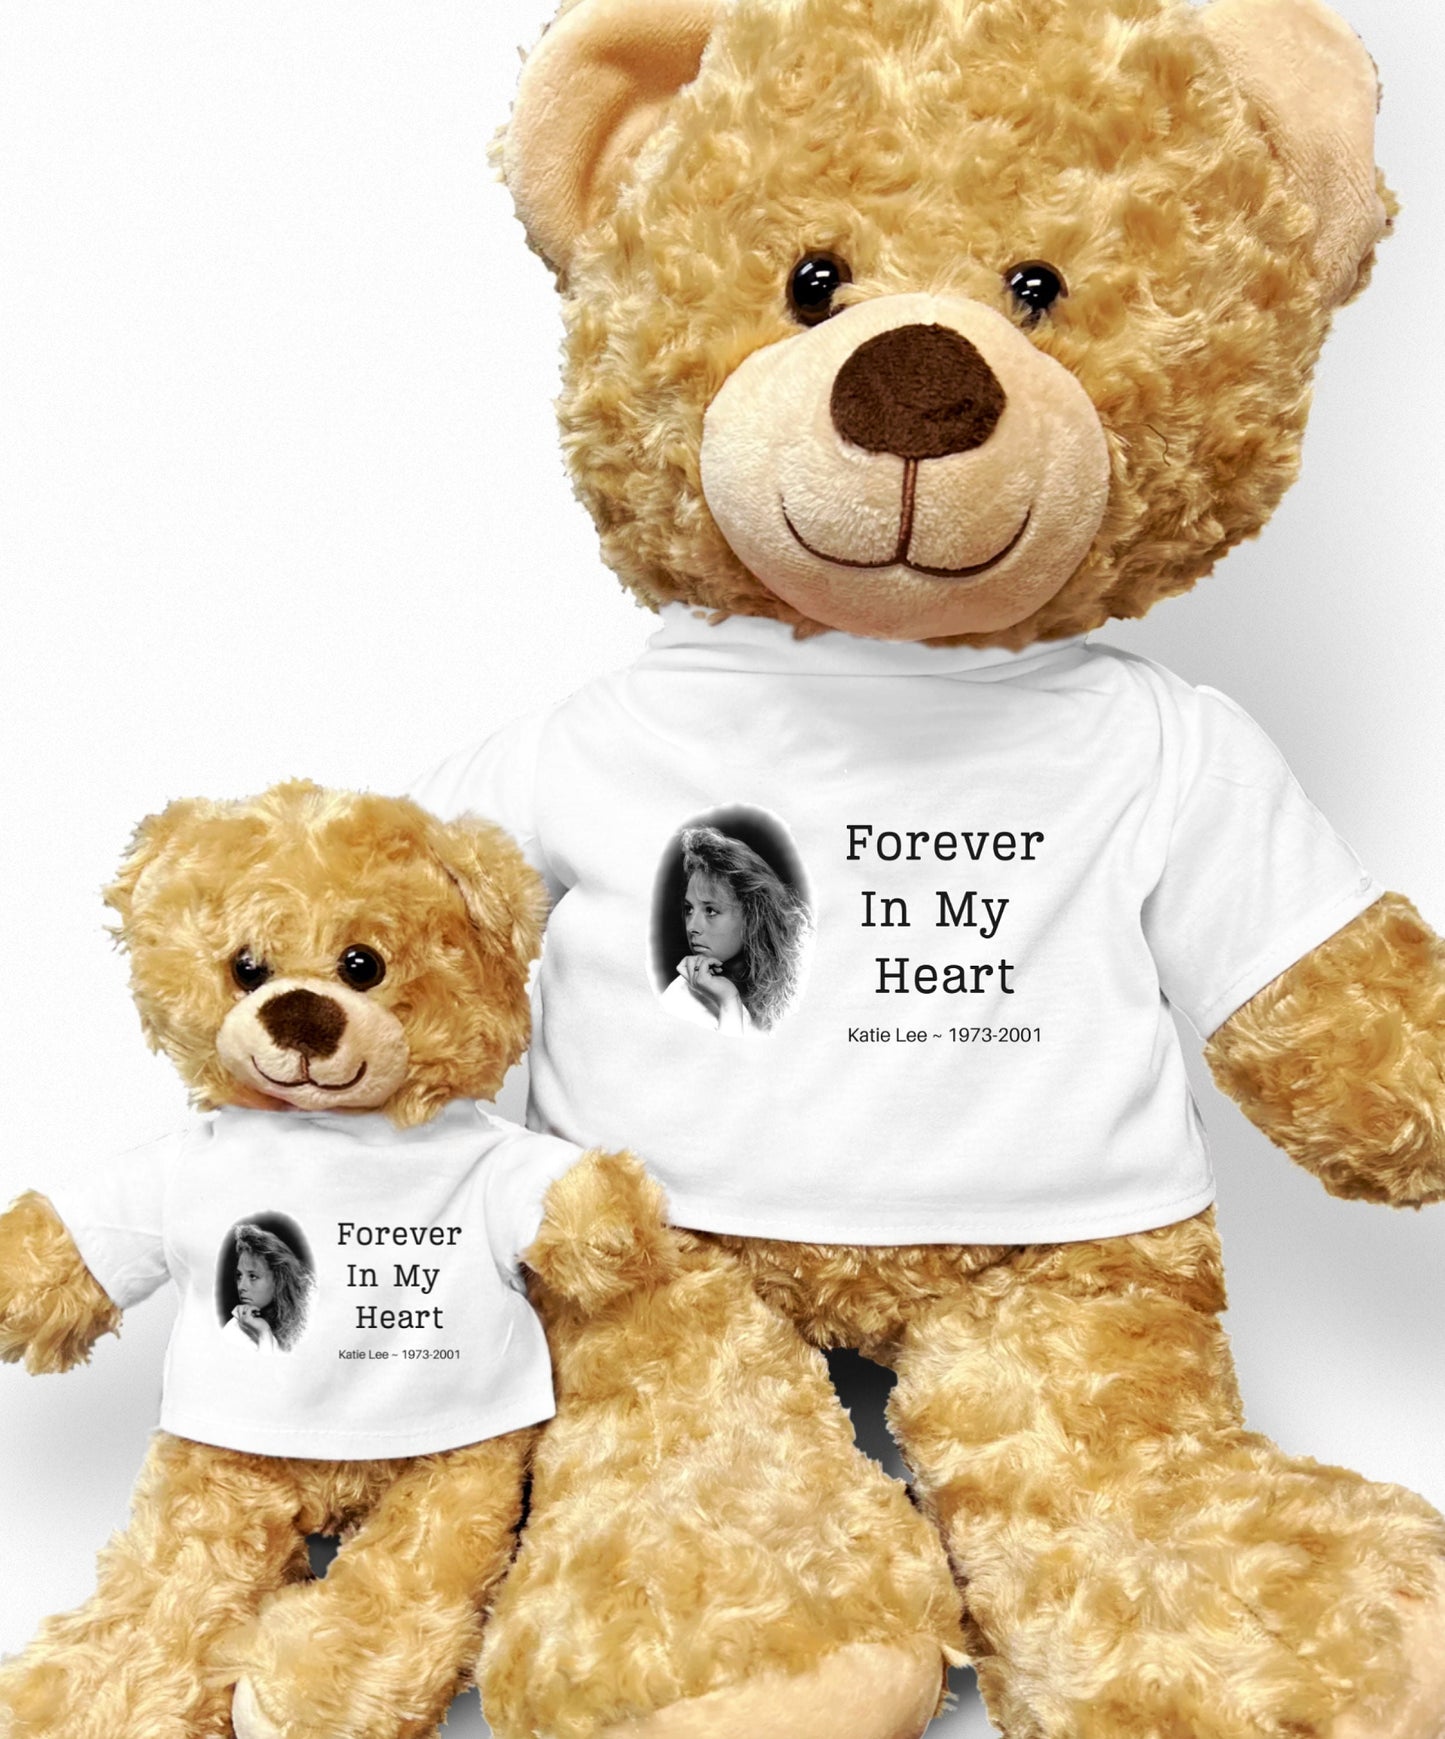 Memory Bear, Memory Teddy Bear, Loss of Loved One, Sympathy Gift, Sympathy Bear, Customizable Memorial Gift, Loss of Dad, Loss of Mom